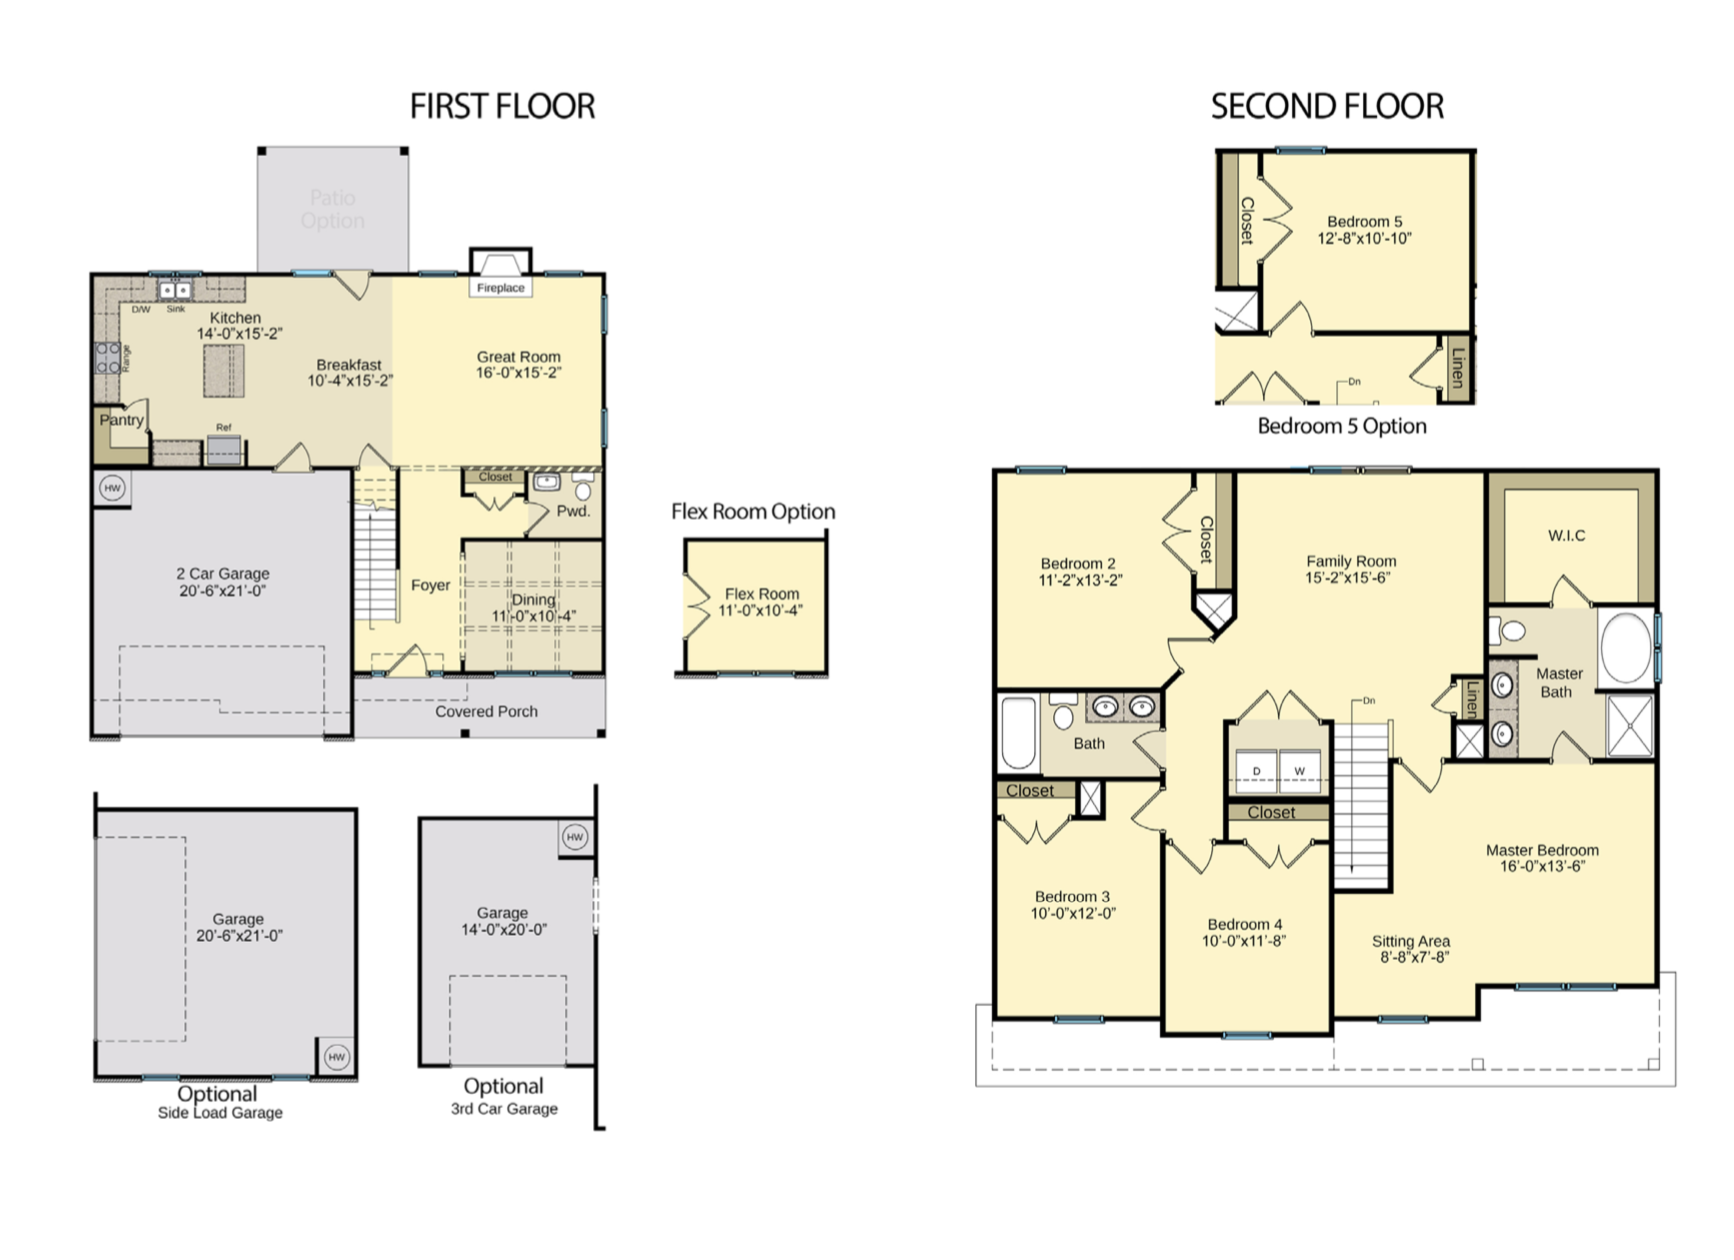 The Drayton floor plan image